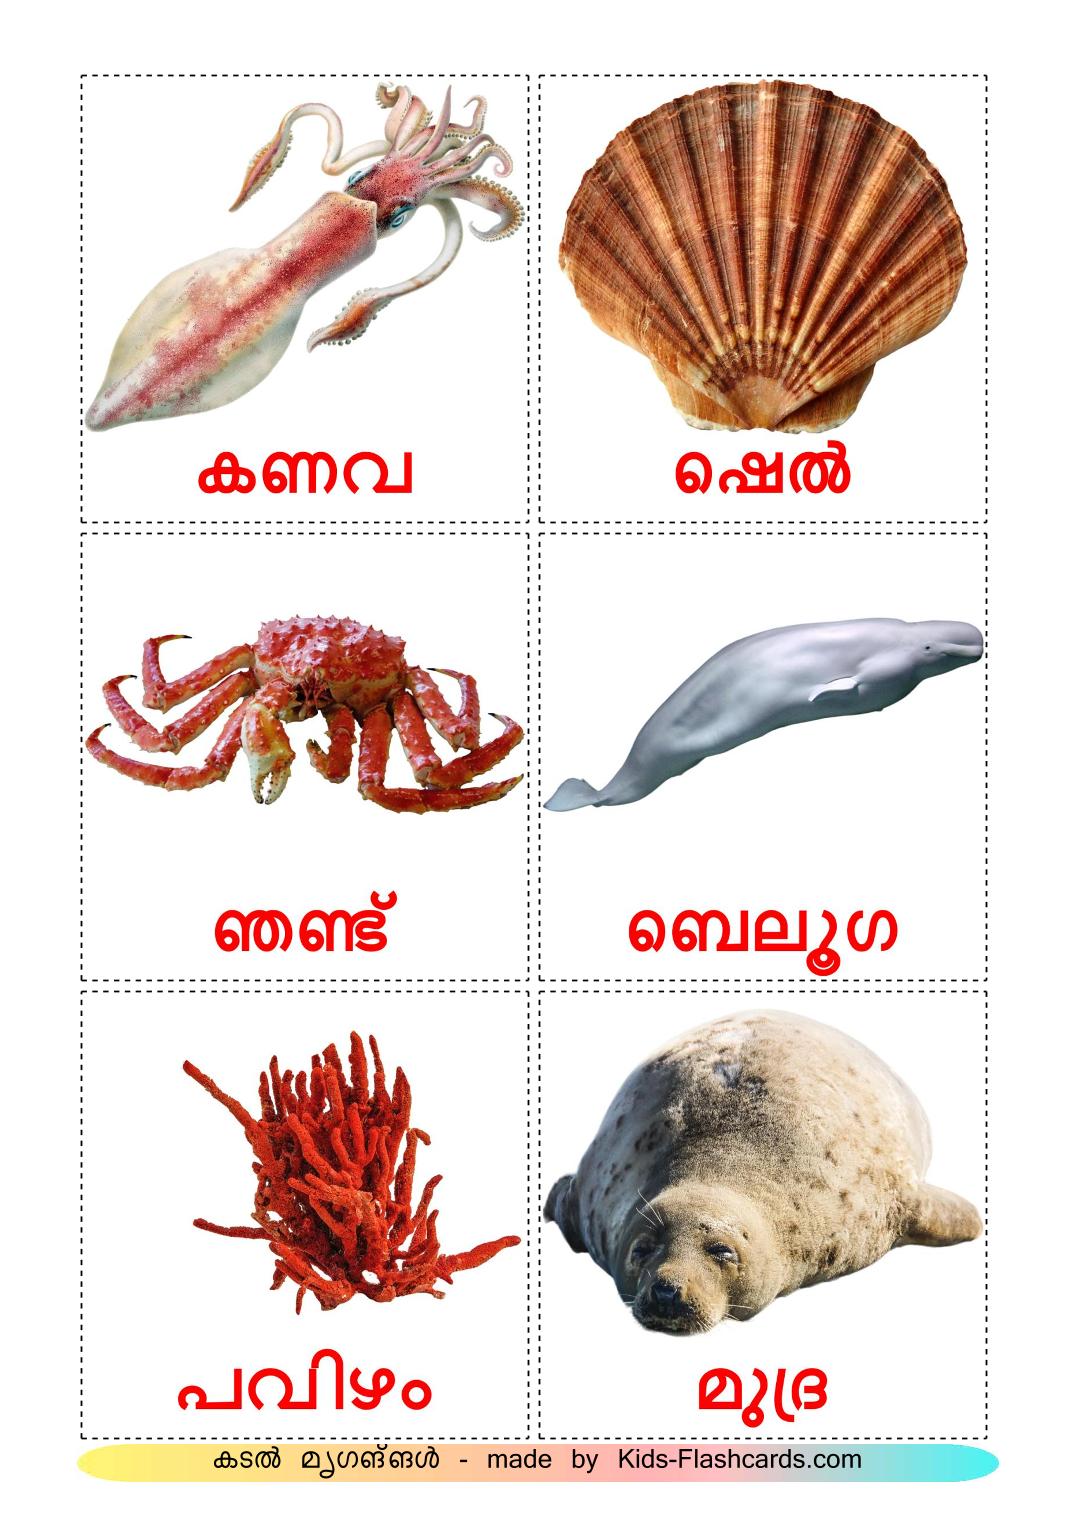 Zeedieren - 29 gratis printbare malayalame kaarten